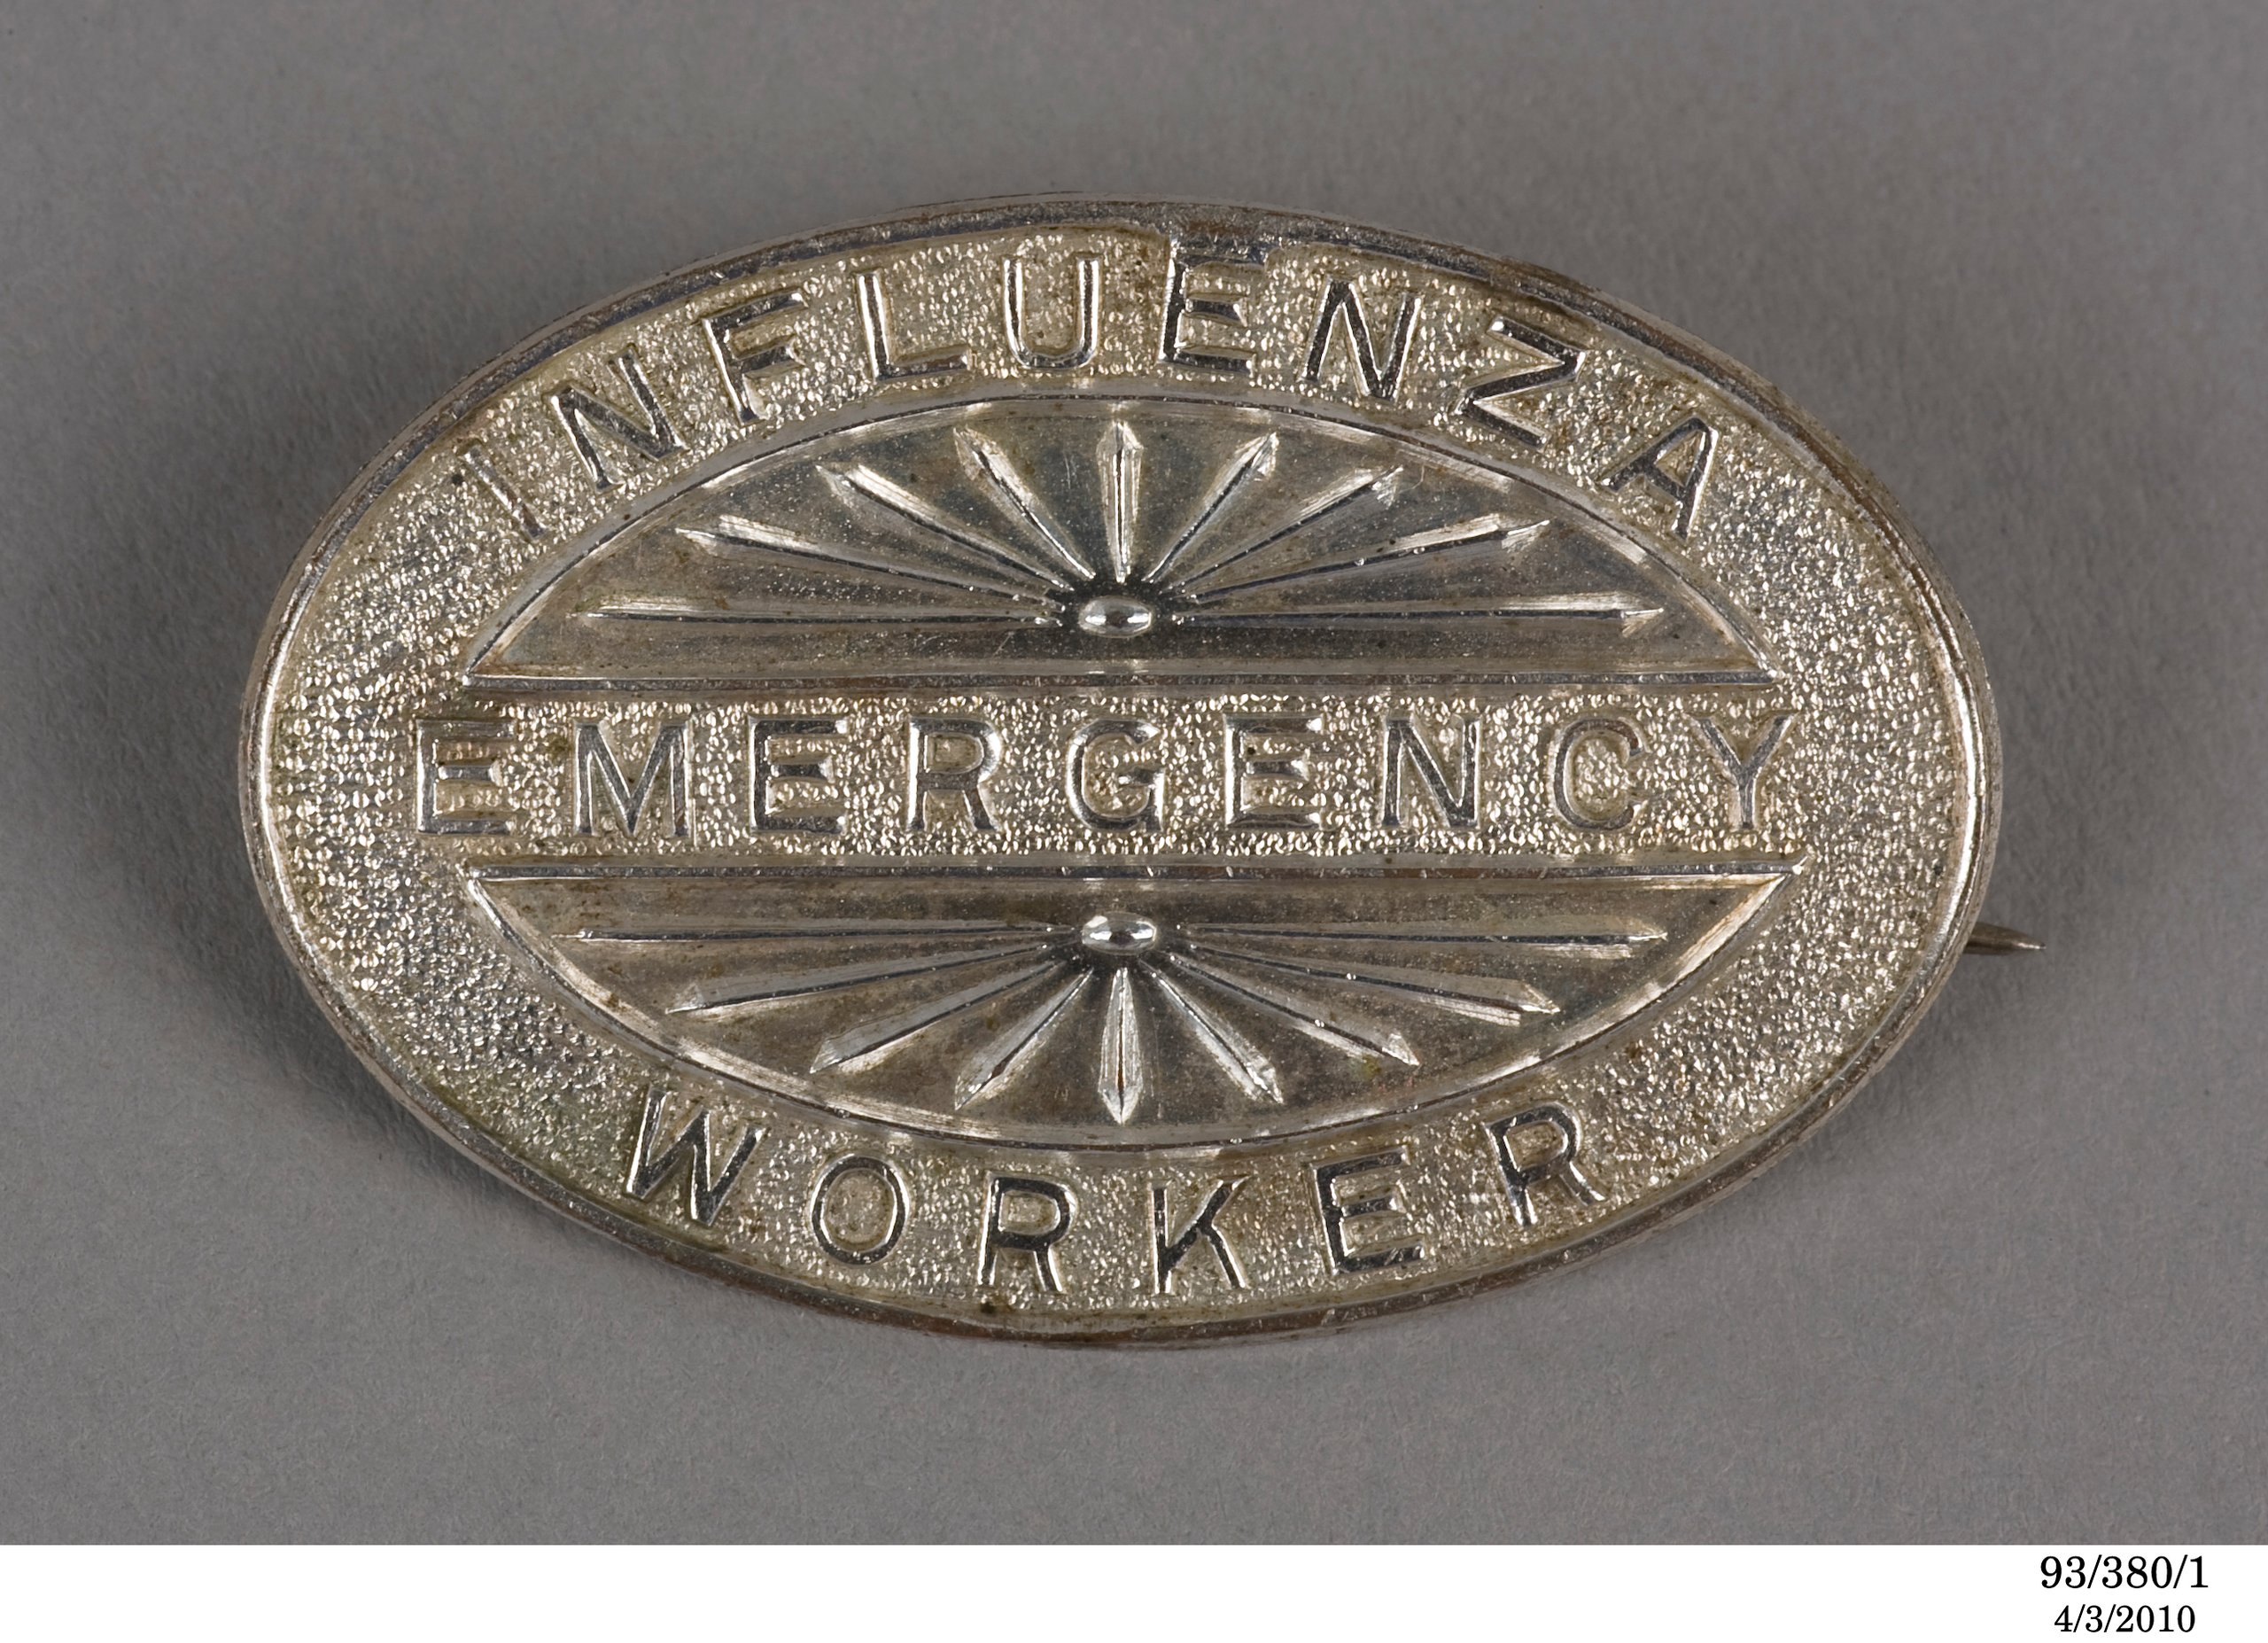 Influenza Emergency Worker's badge, c.1919